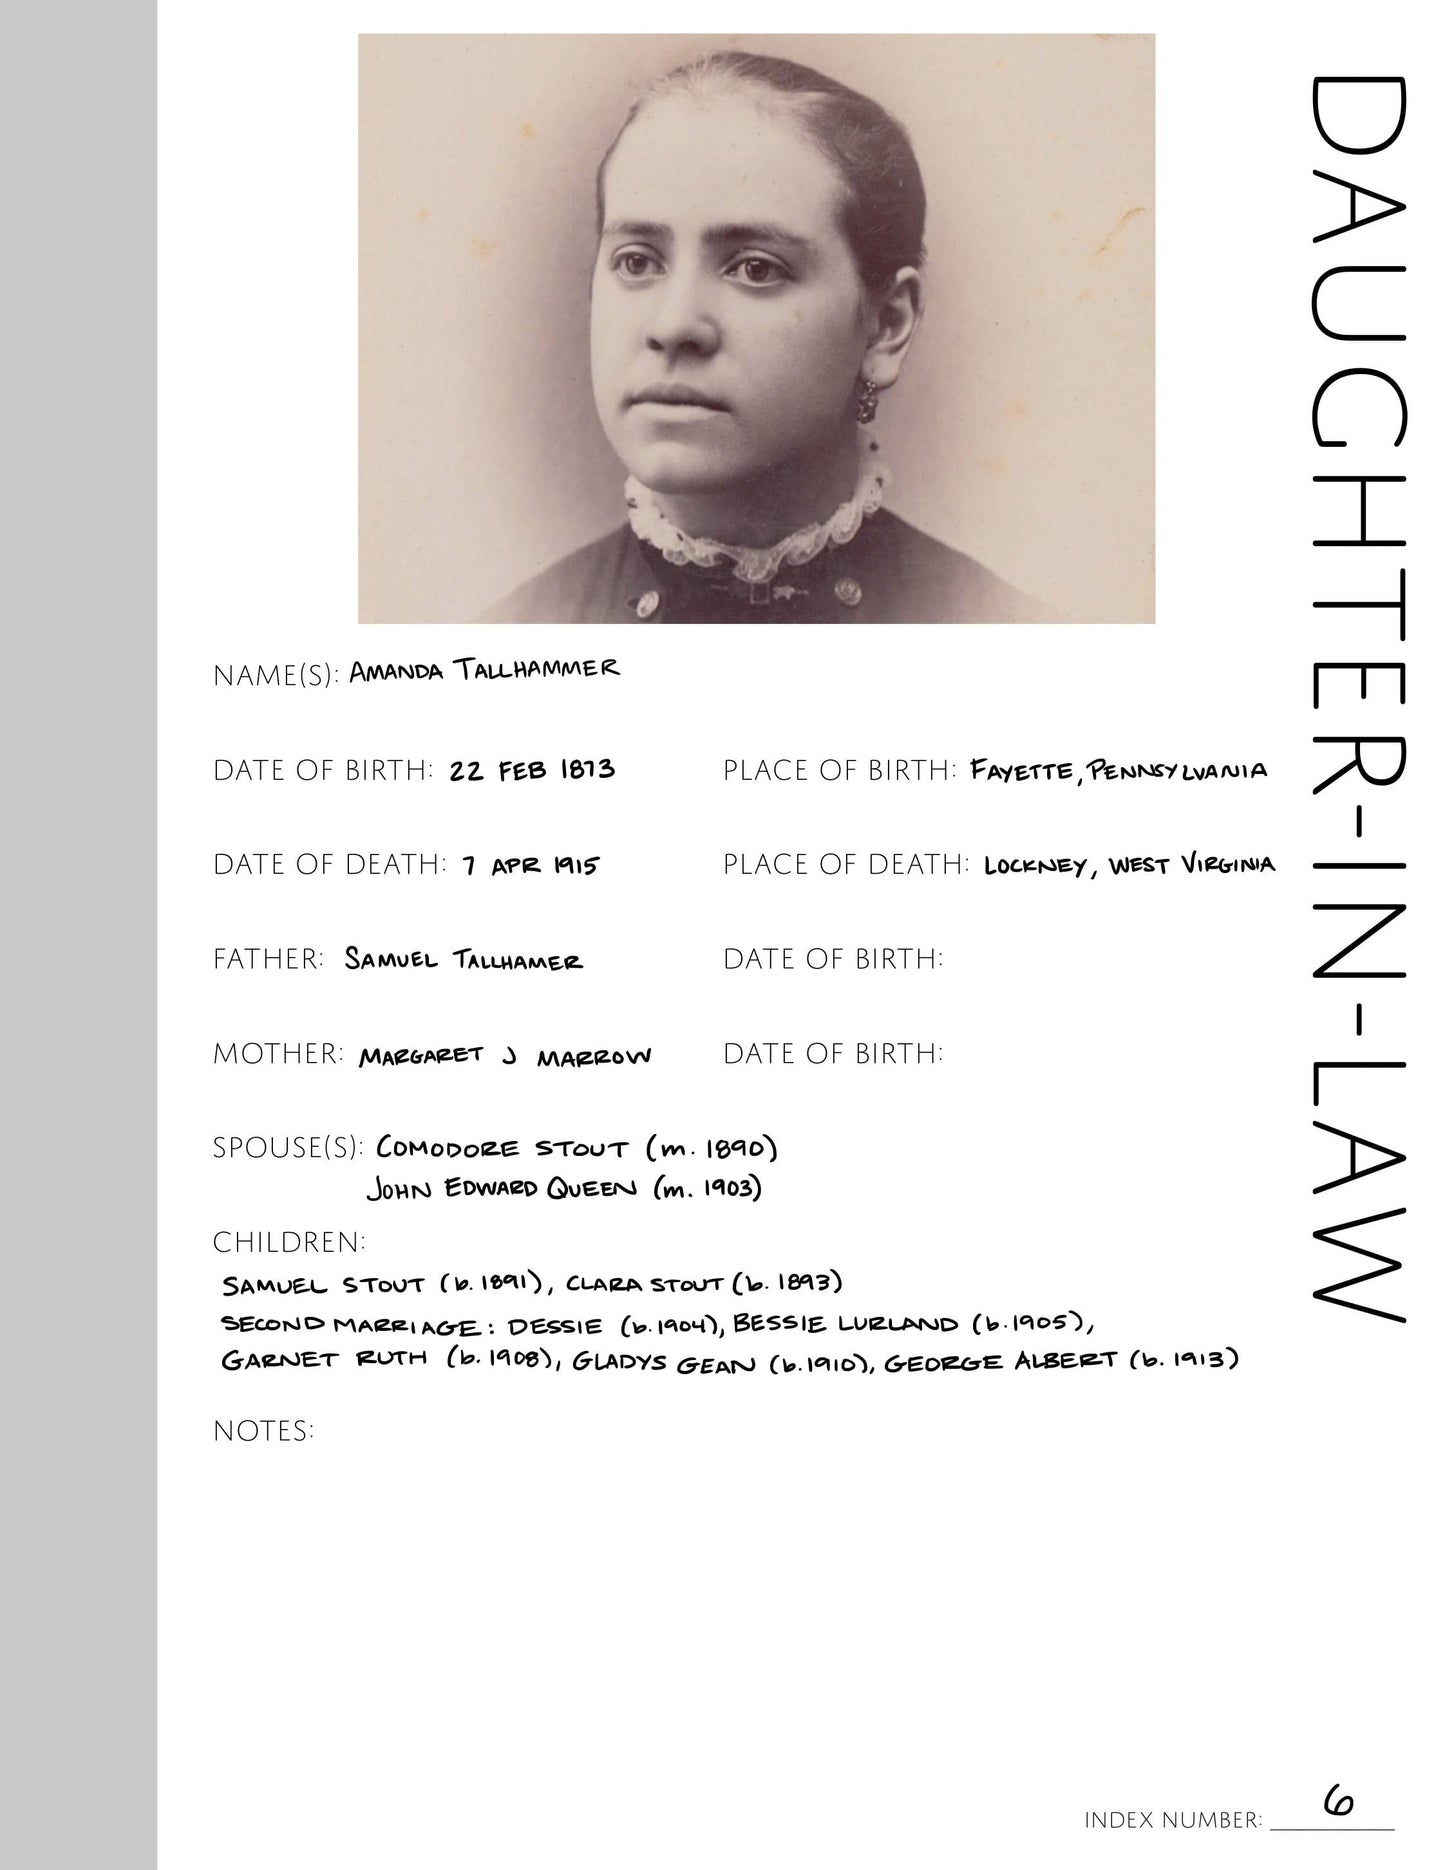 Daughter-in-Law: Printable Genealogy Form (Digital Download)